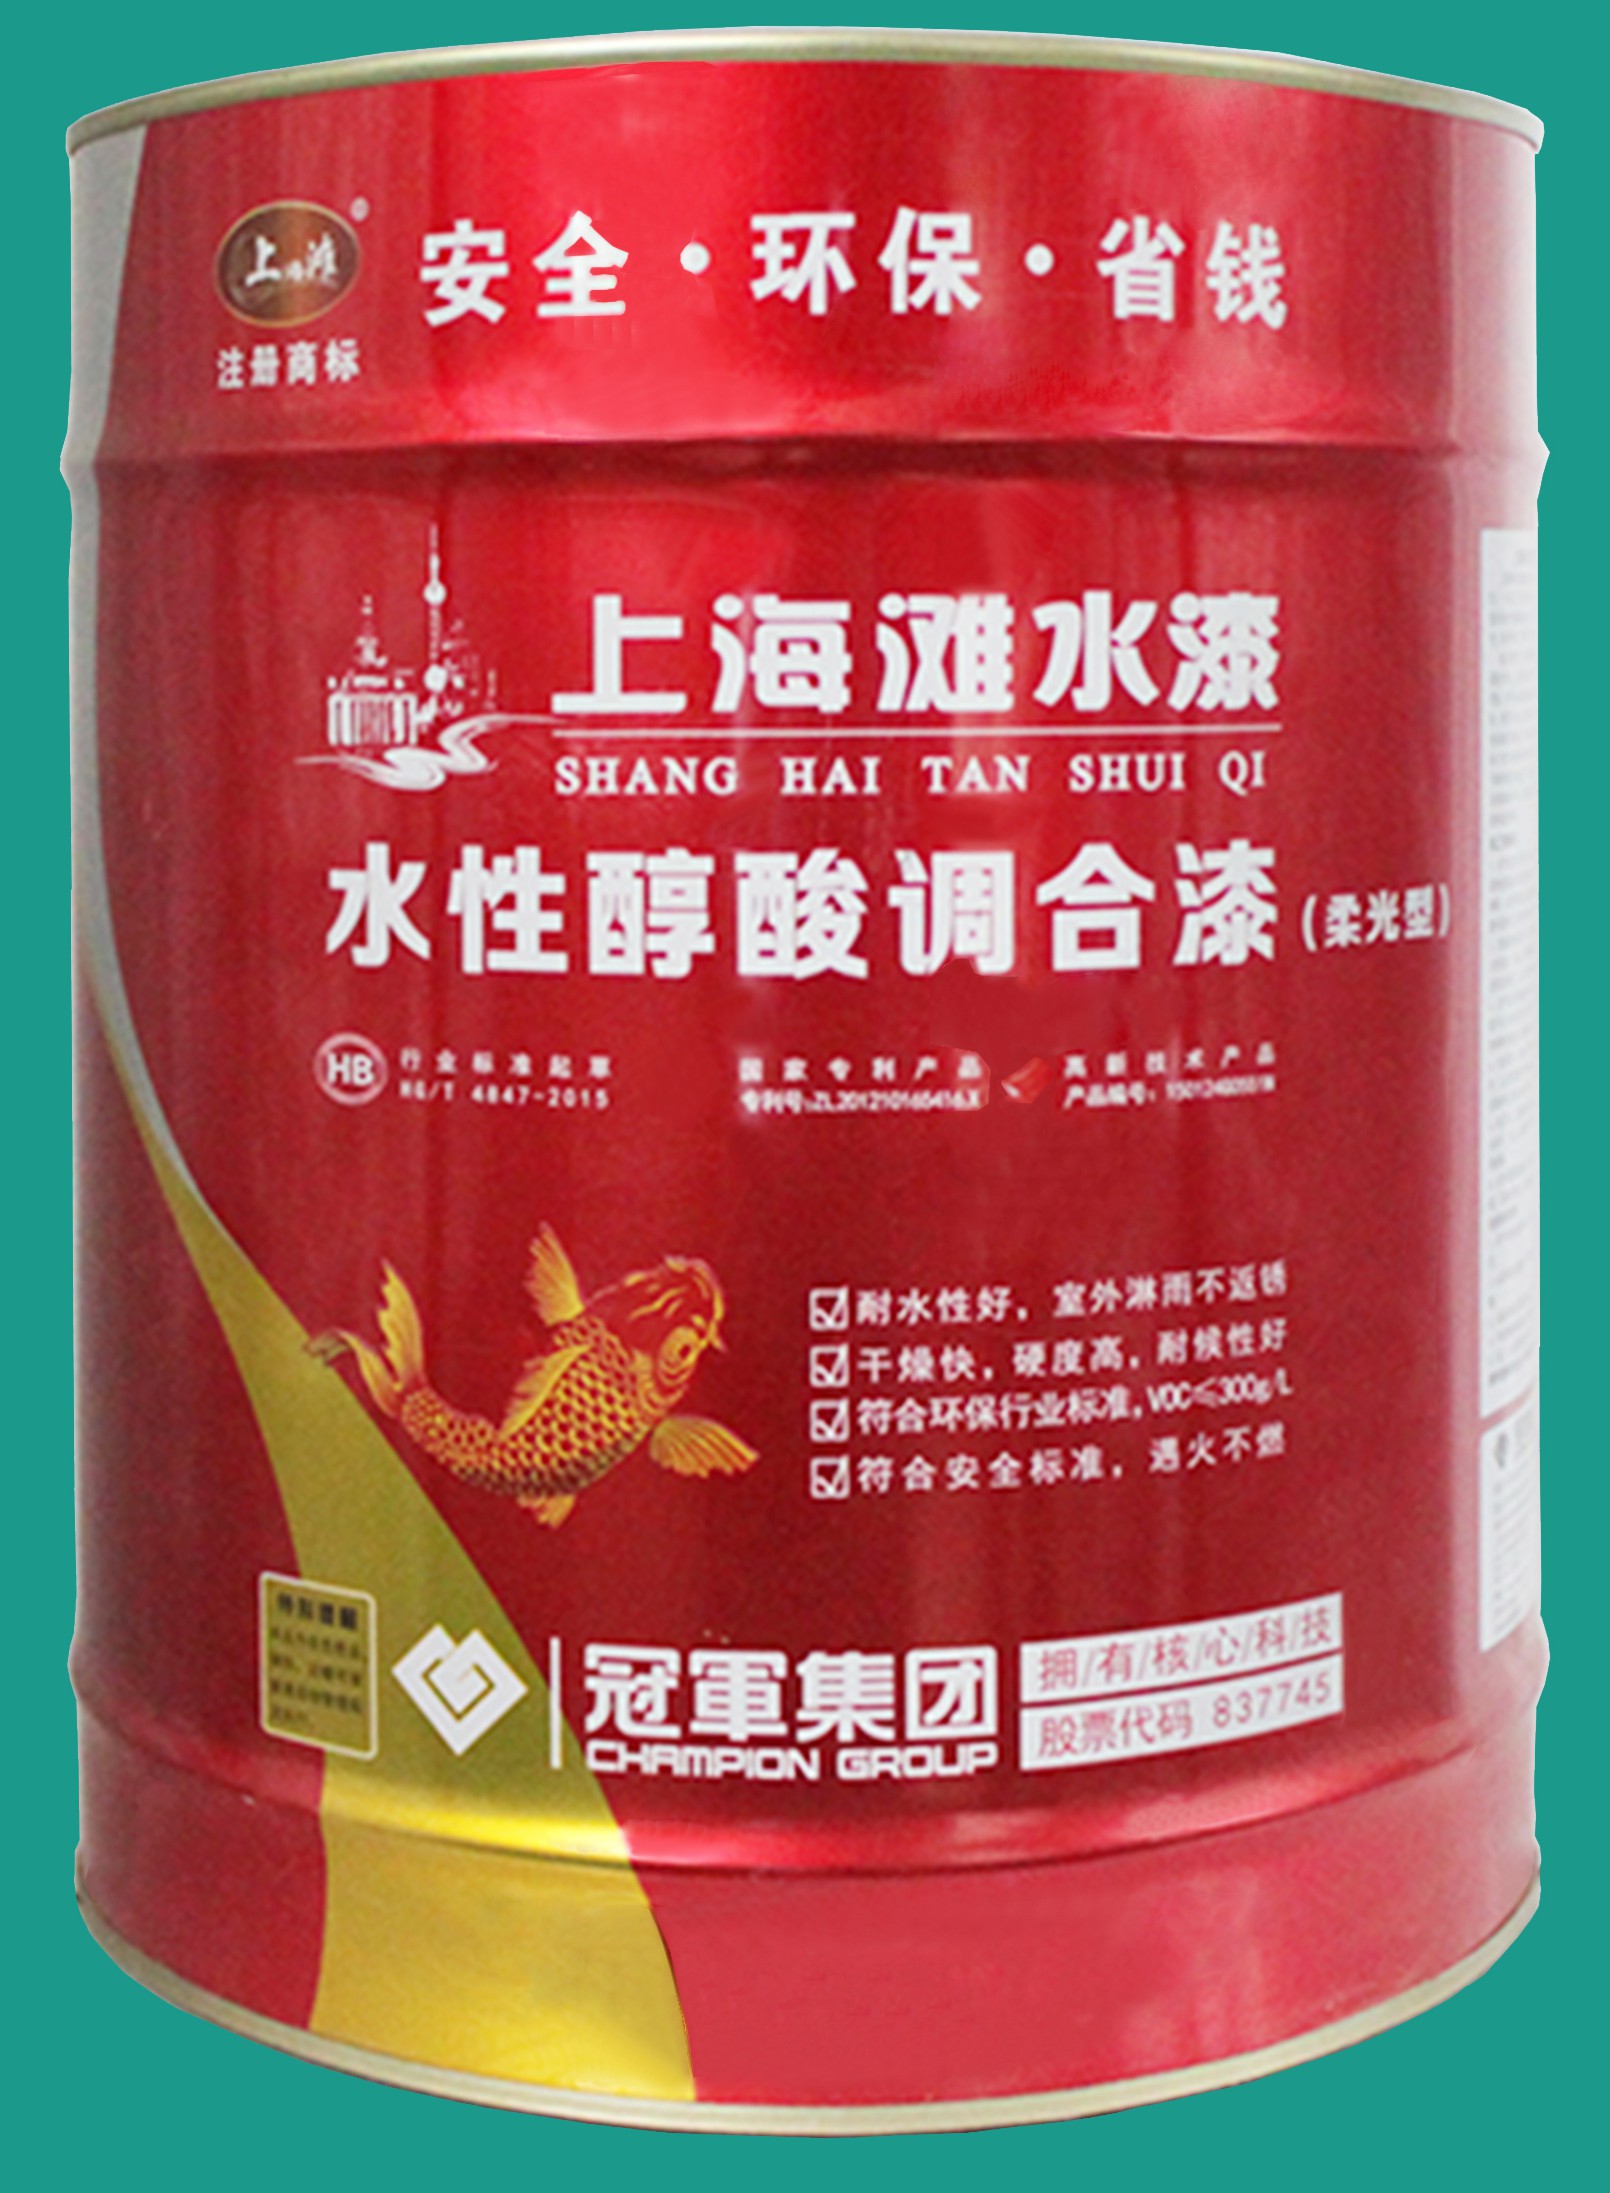 cn305254043s_油漆包装桶(上海滩水漆水性醇酸调和漆)有效